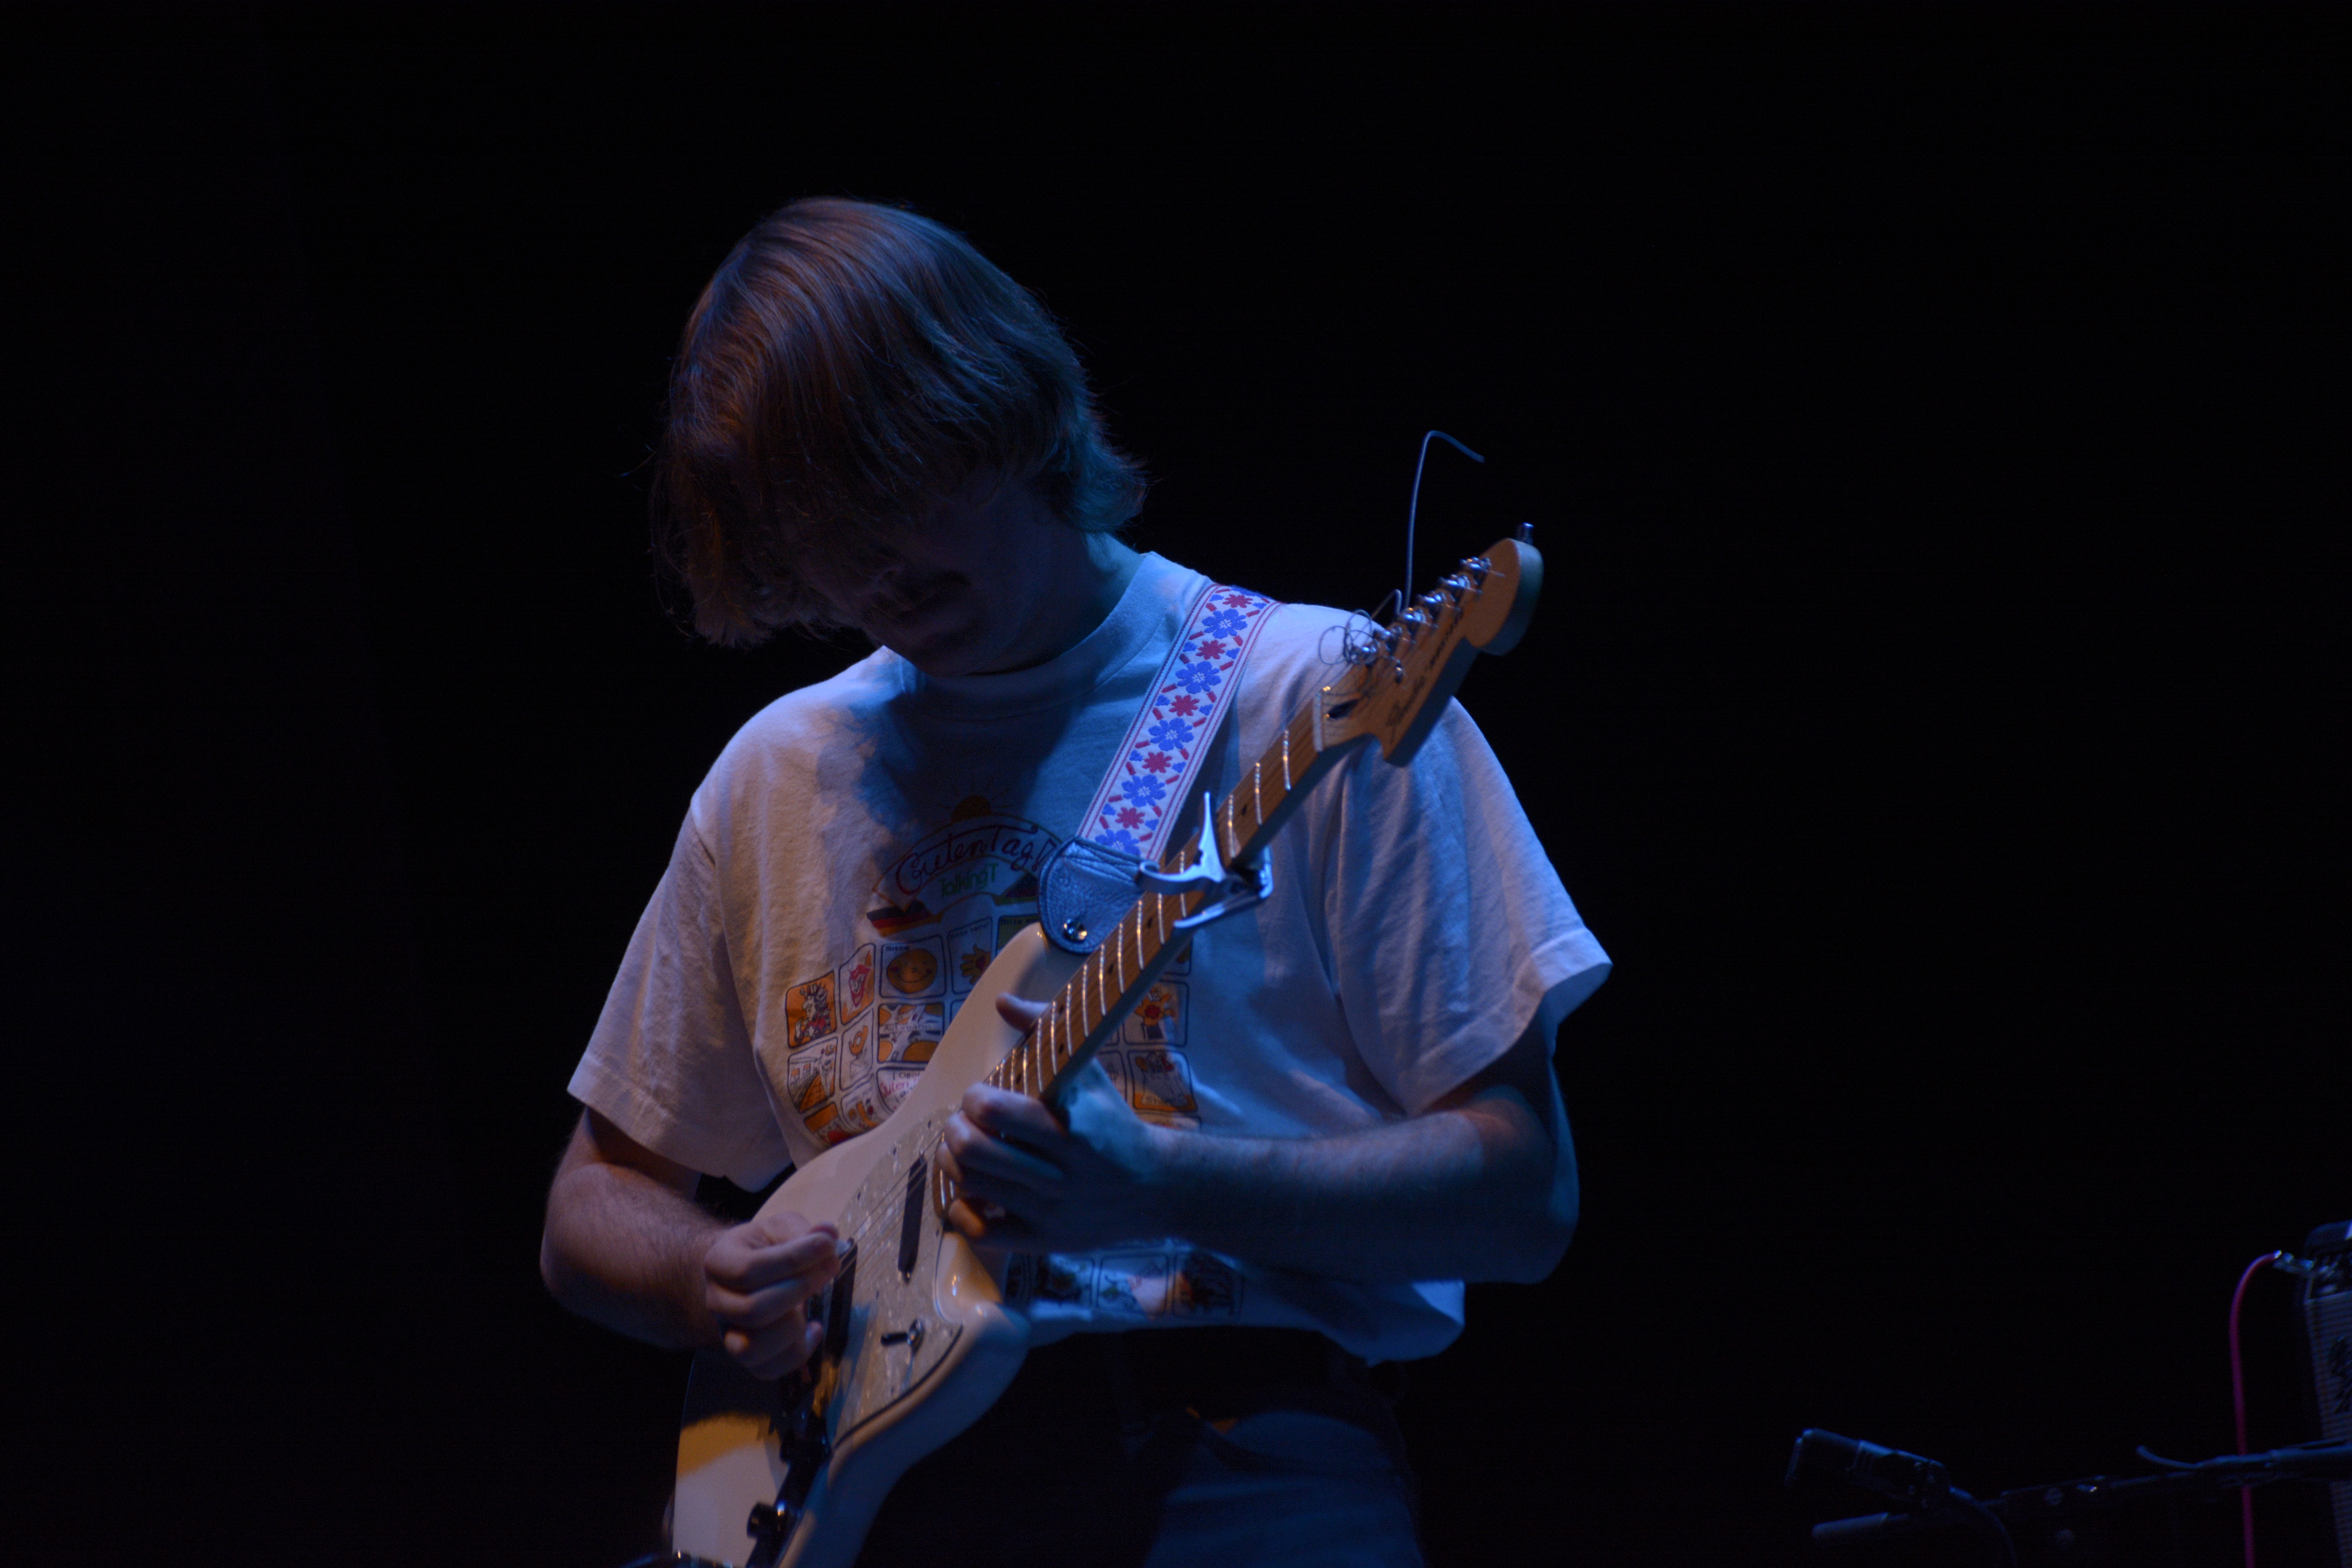 Peach Pit concert at Cornell - guitarist